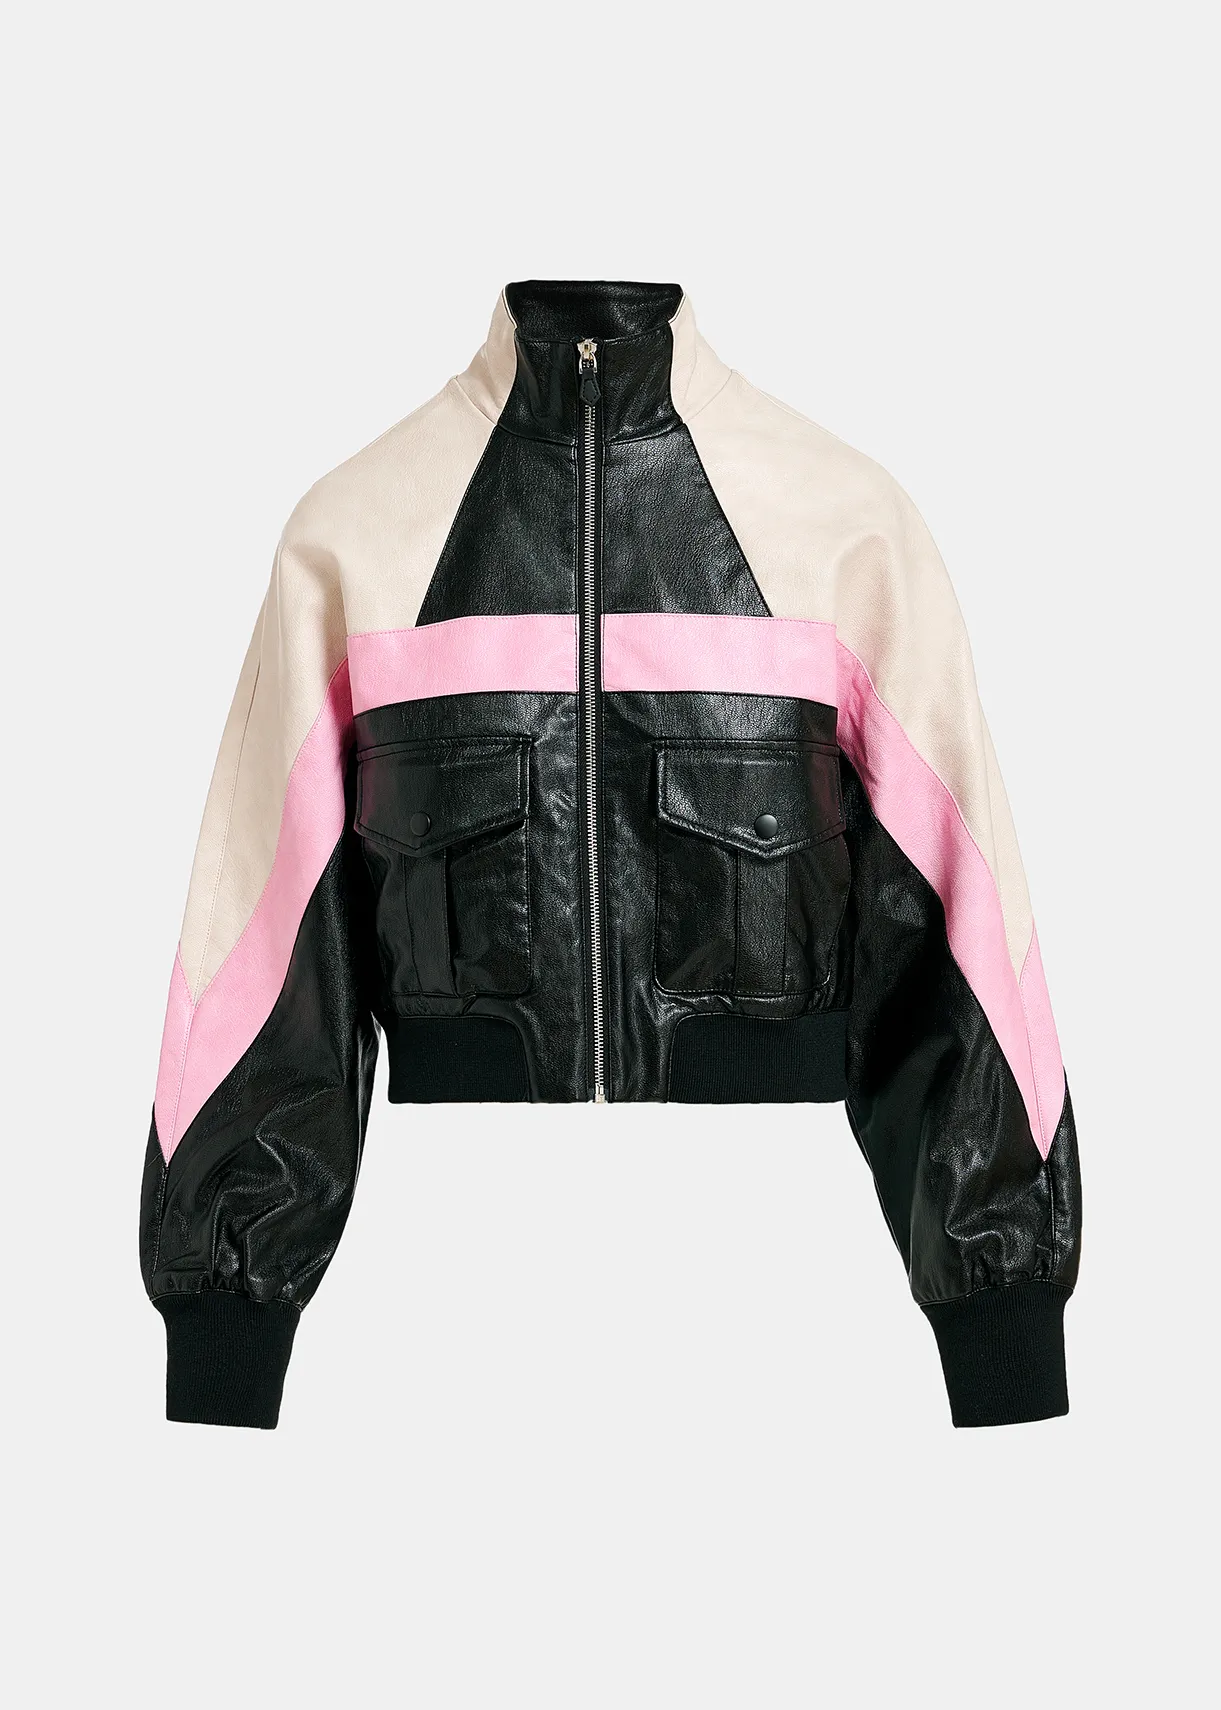 Essentiel faux jacket patchwork Black, leather pink Antwerp ecru | Germany and